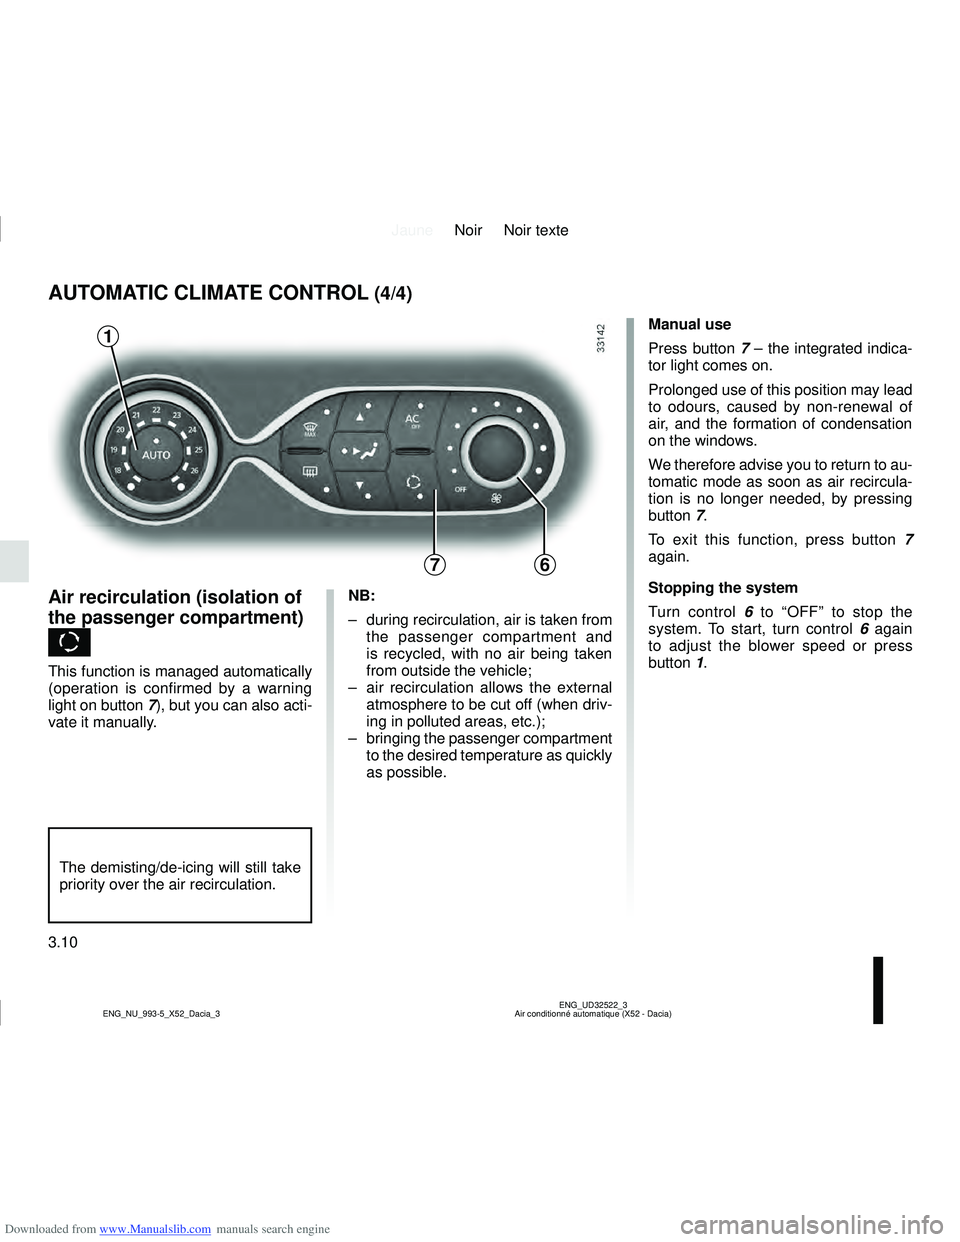 DACIA LOGAN 2015  Owners Manual Downloaded from www.Manualslib.com manuals search engine JauneNoir Noir texte
3.10
ENG_UD32522_3
Air conditionné automatique (X52 - Dacia)
ENG_NU_993-5_X52_Dacia_3
AUTOMATIC CLIMATE CONTROL (4/4)
76
